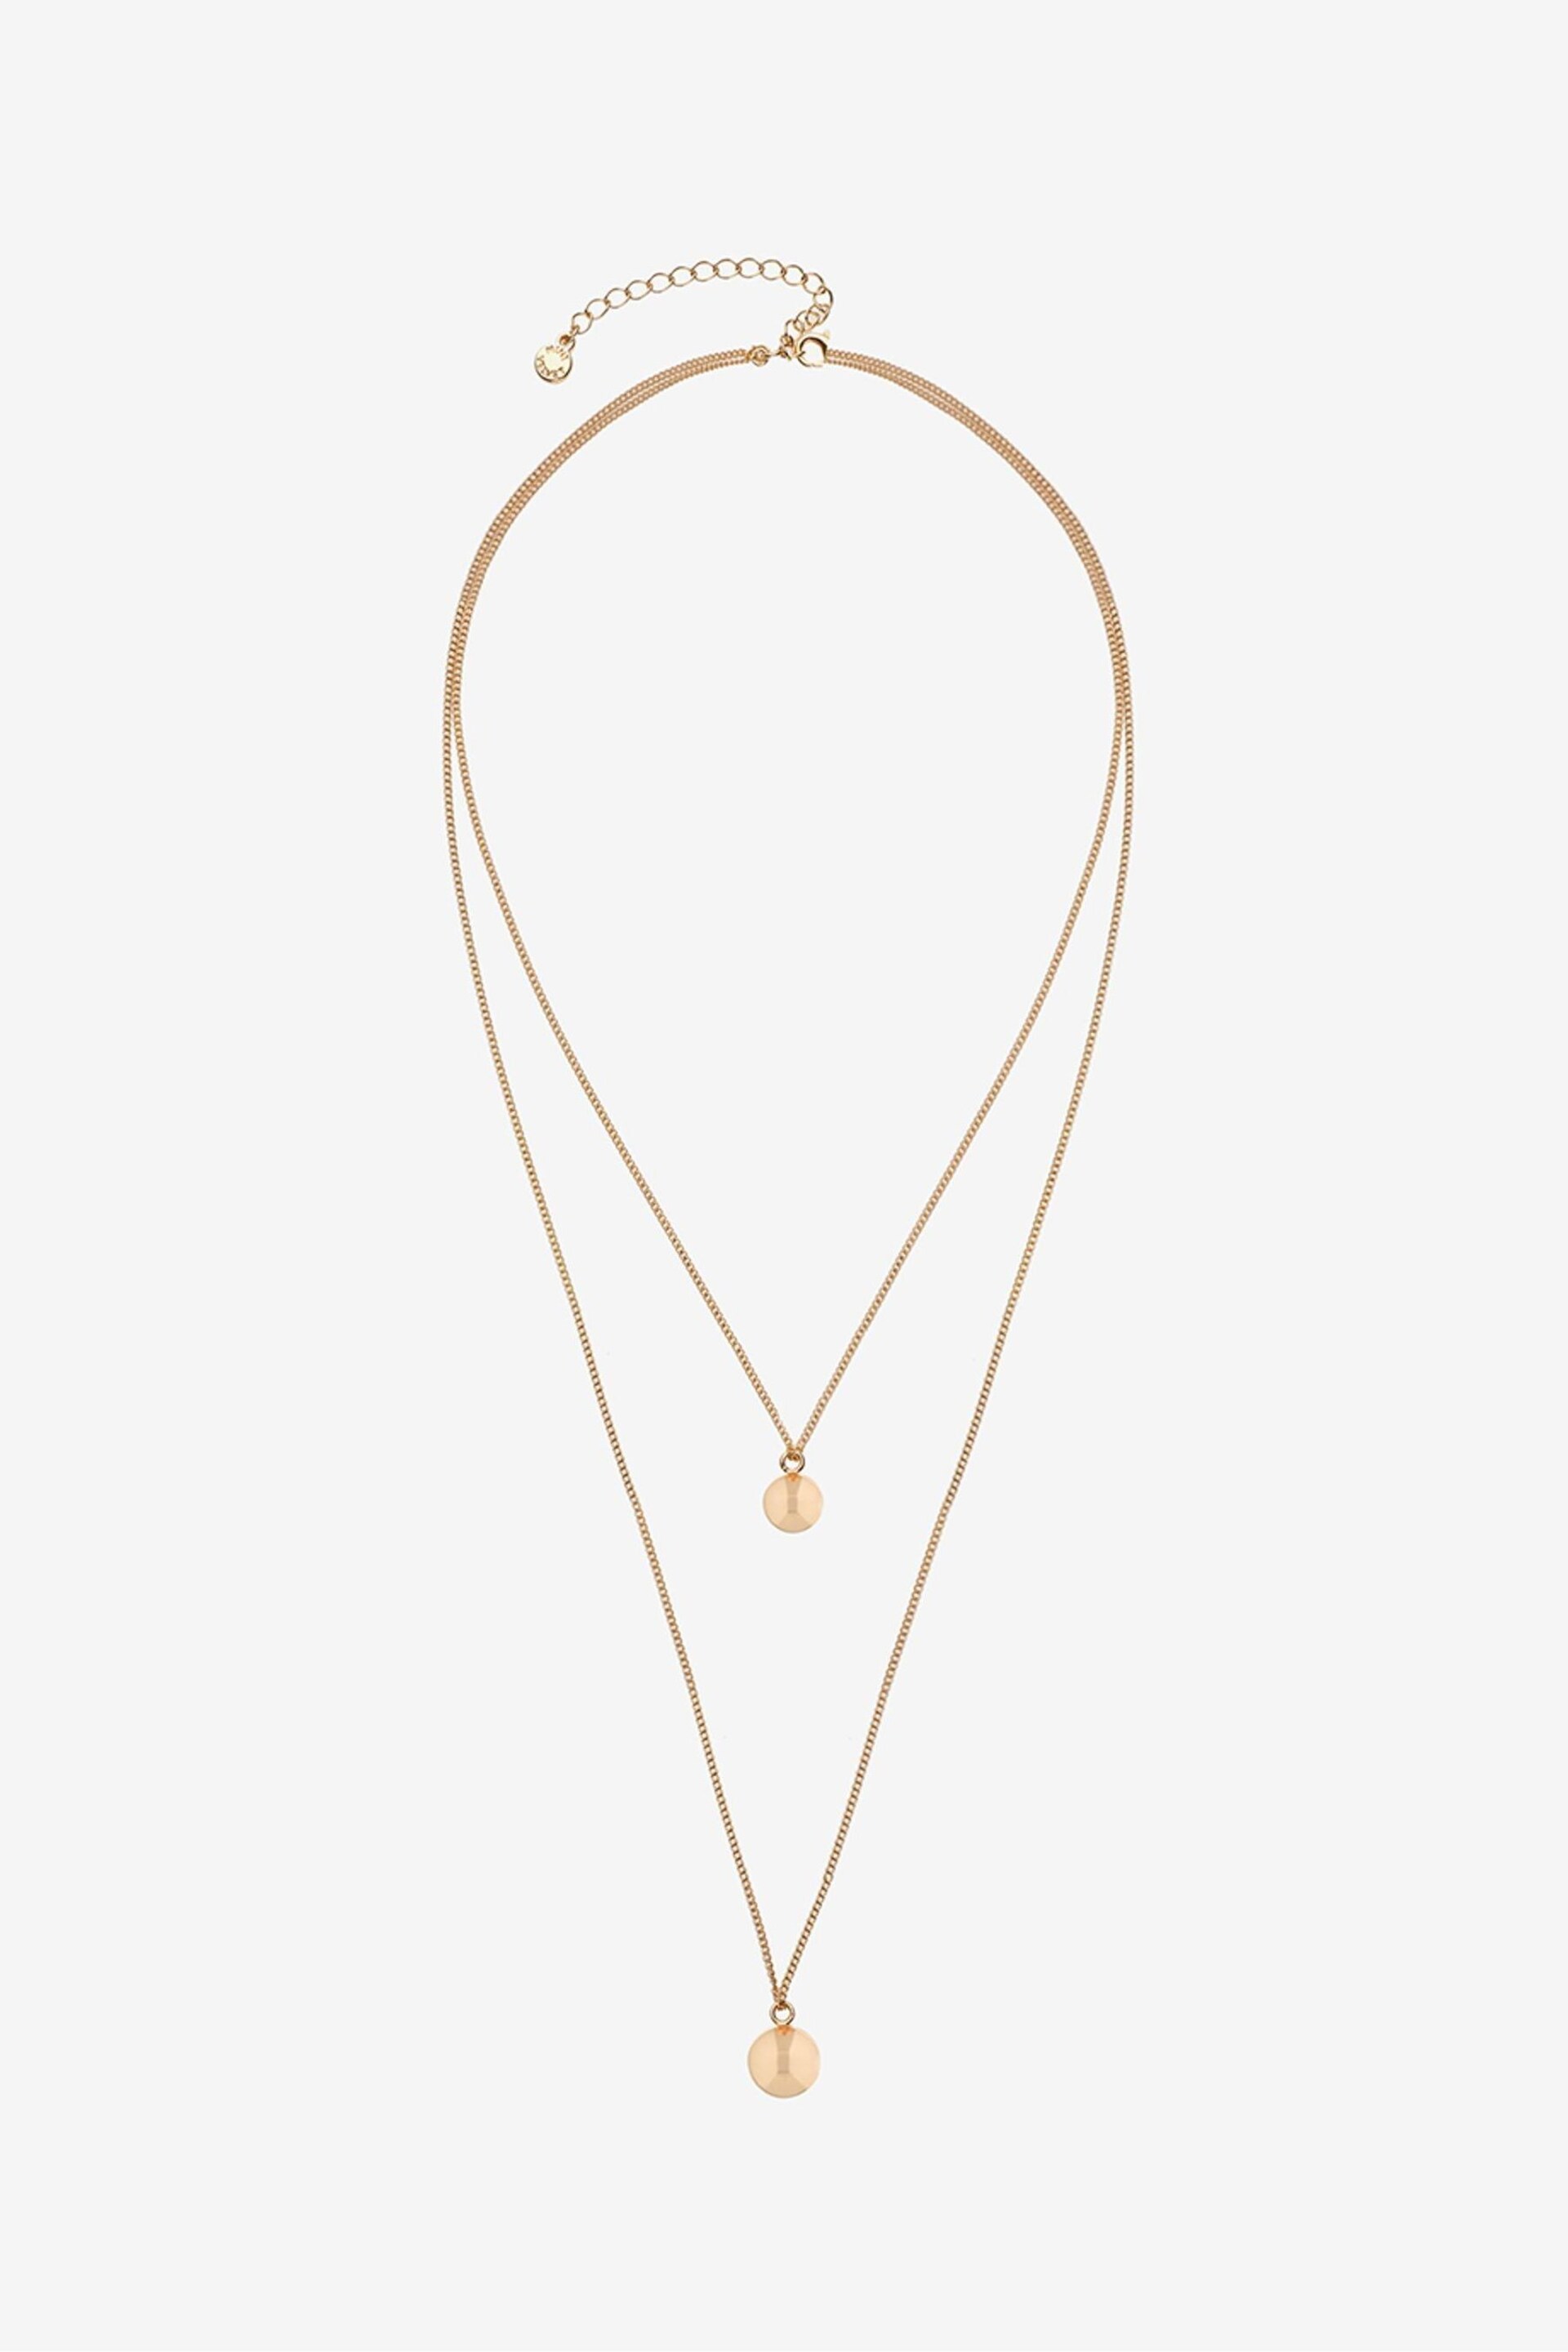 Mint Velvet Gold Tone Double Necklace - Image 1 of 3